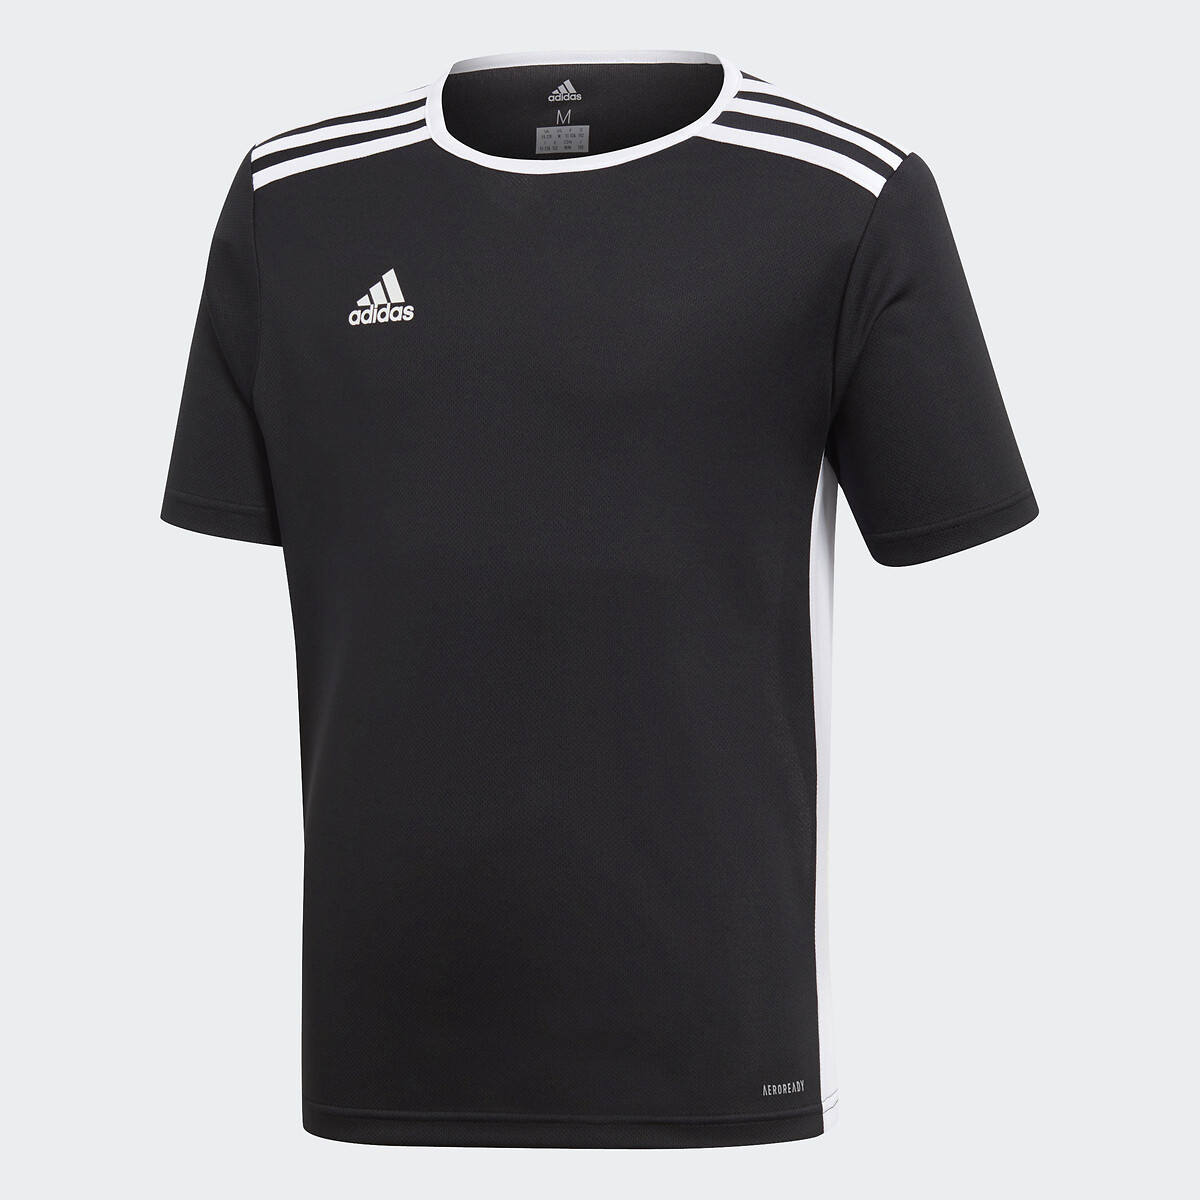 La Fussball-trikot Performance Adidas schwarz/weiss | Redoute